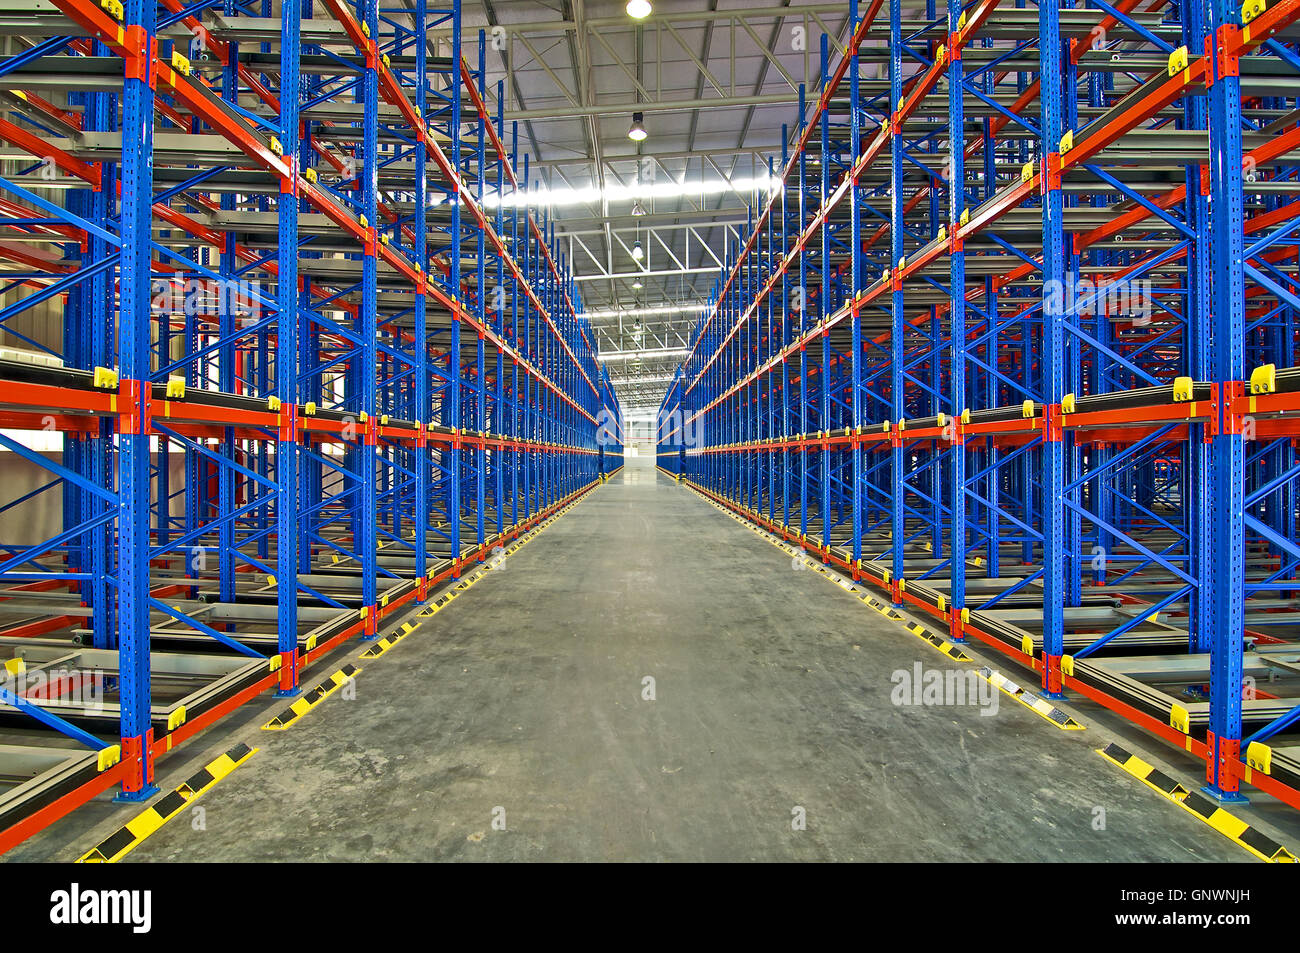 Warehouse storage racking pallet system for metal shelving distribution center Stock Photo